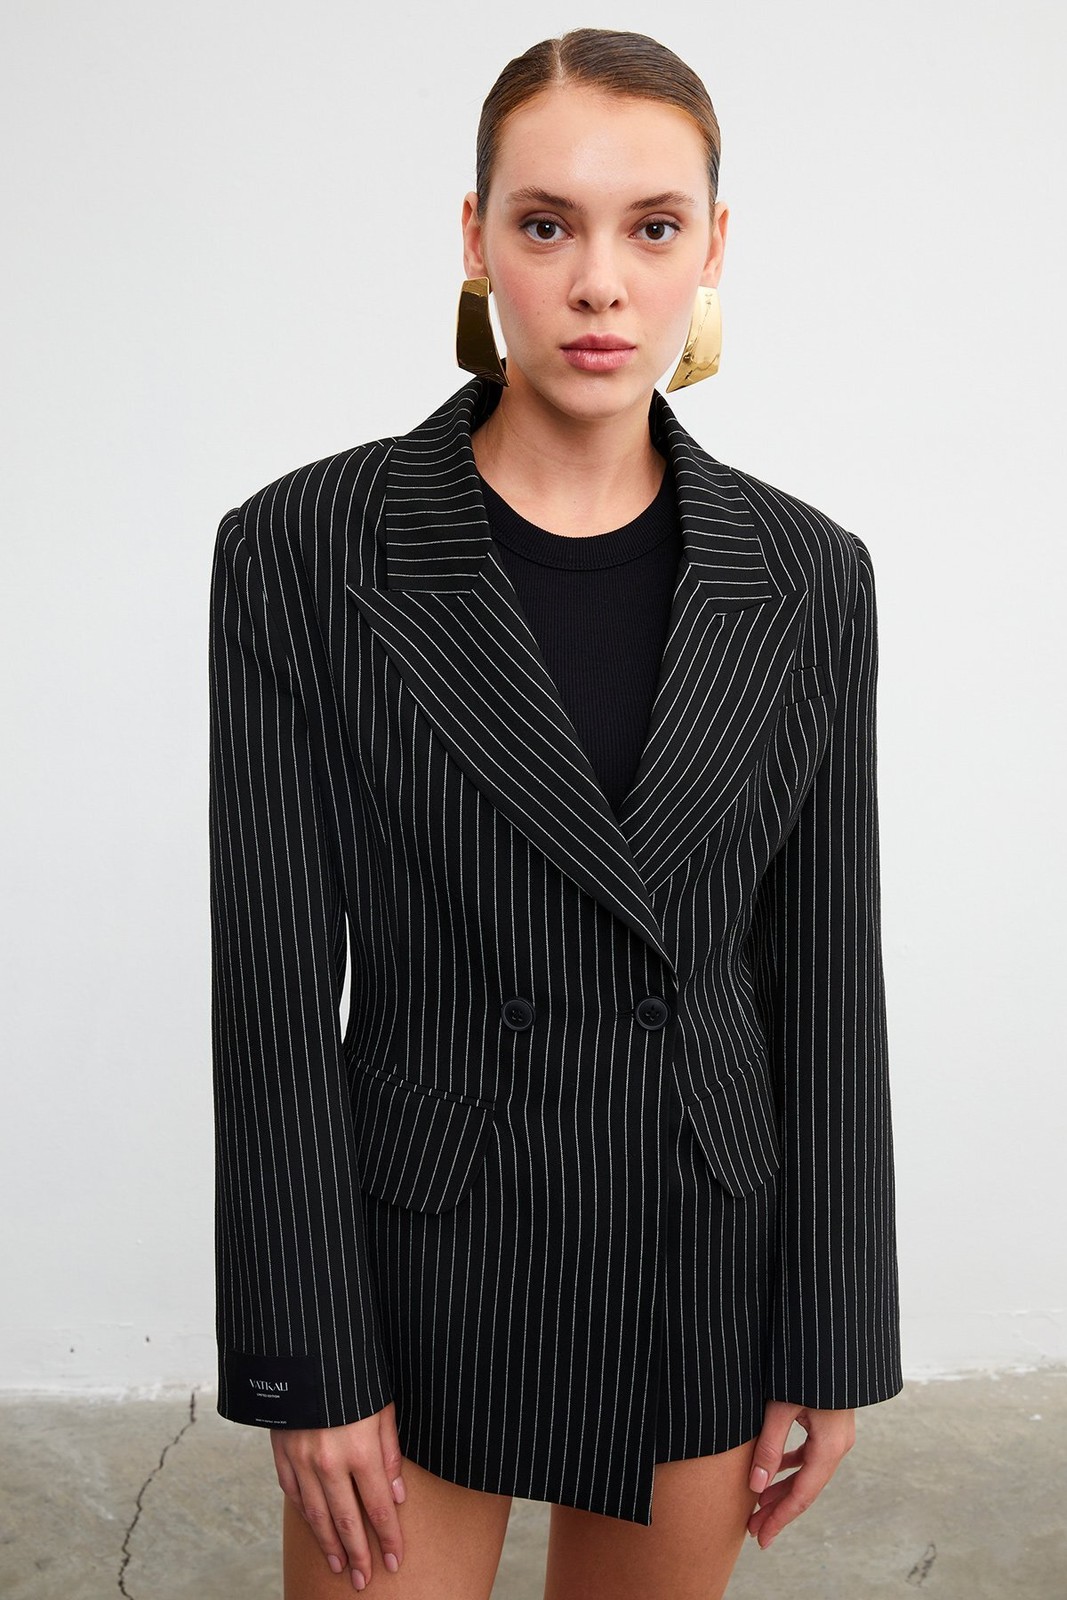 VATKALI Tailored striped blazer